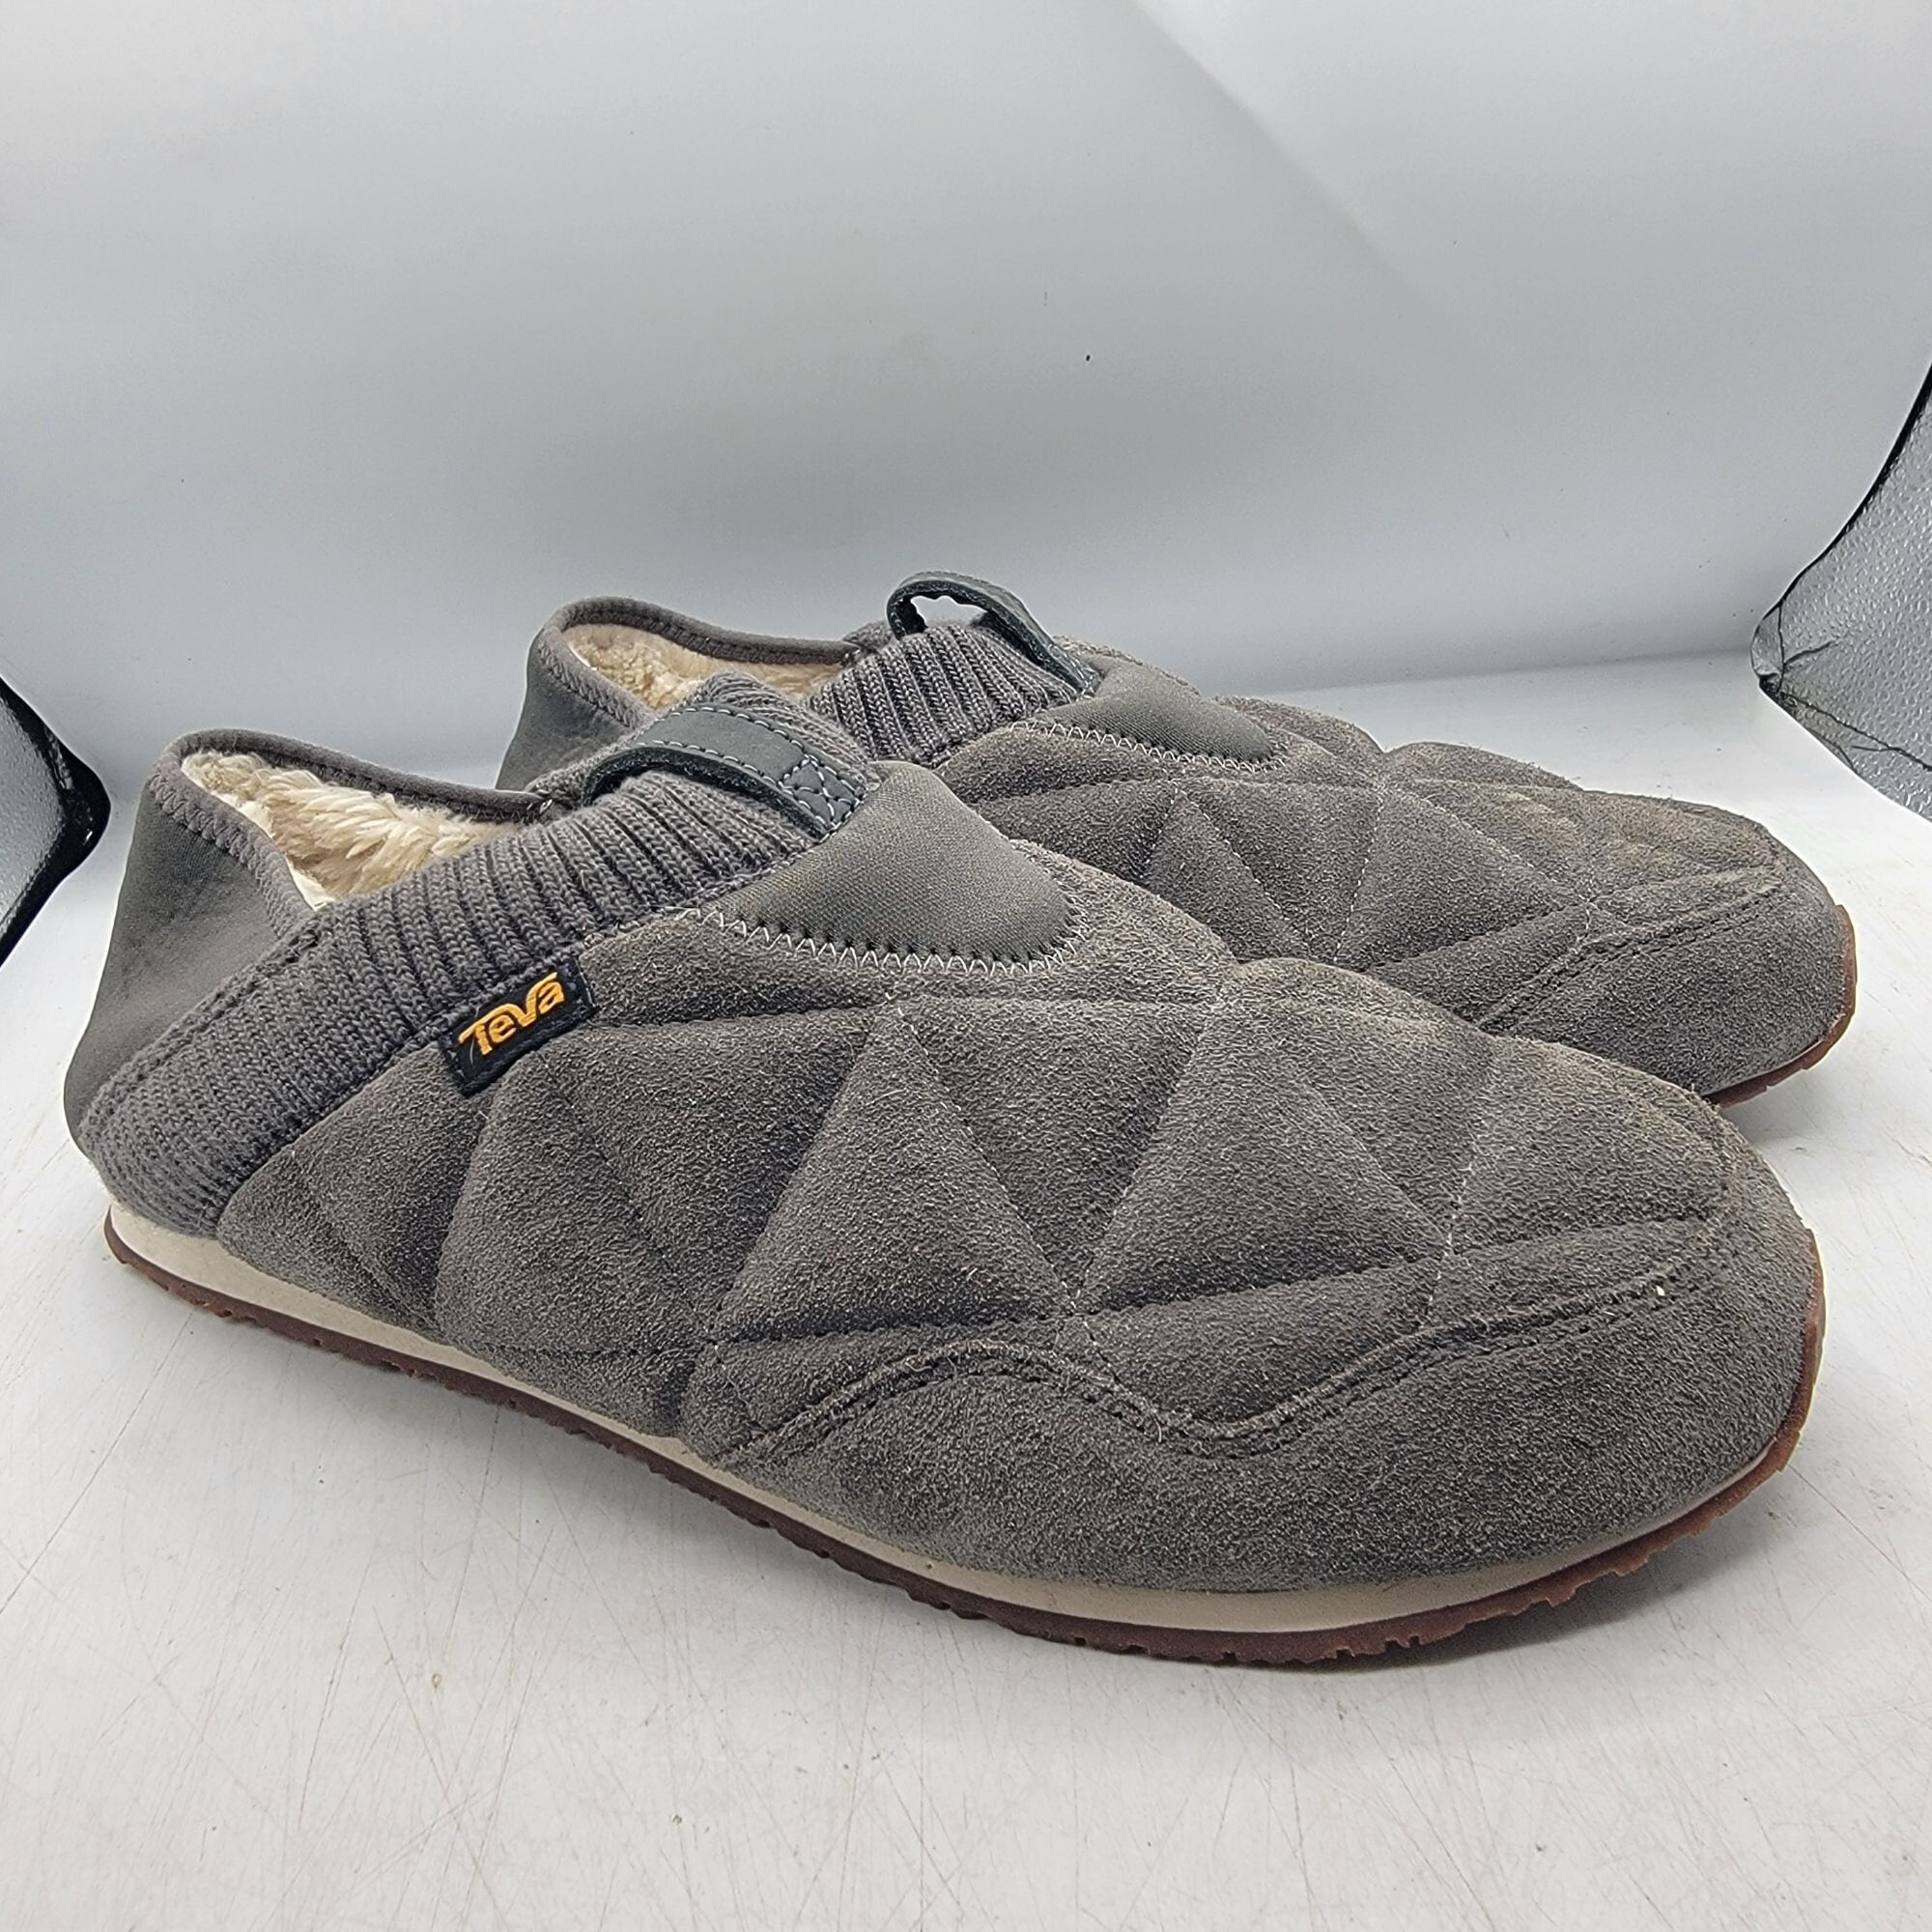 Teva Teva ReEmber Plushed Mens 11 Gray Slipper Shoes Comfort Line Size US 11 / EU 44 - 1 Preview